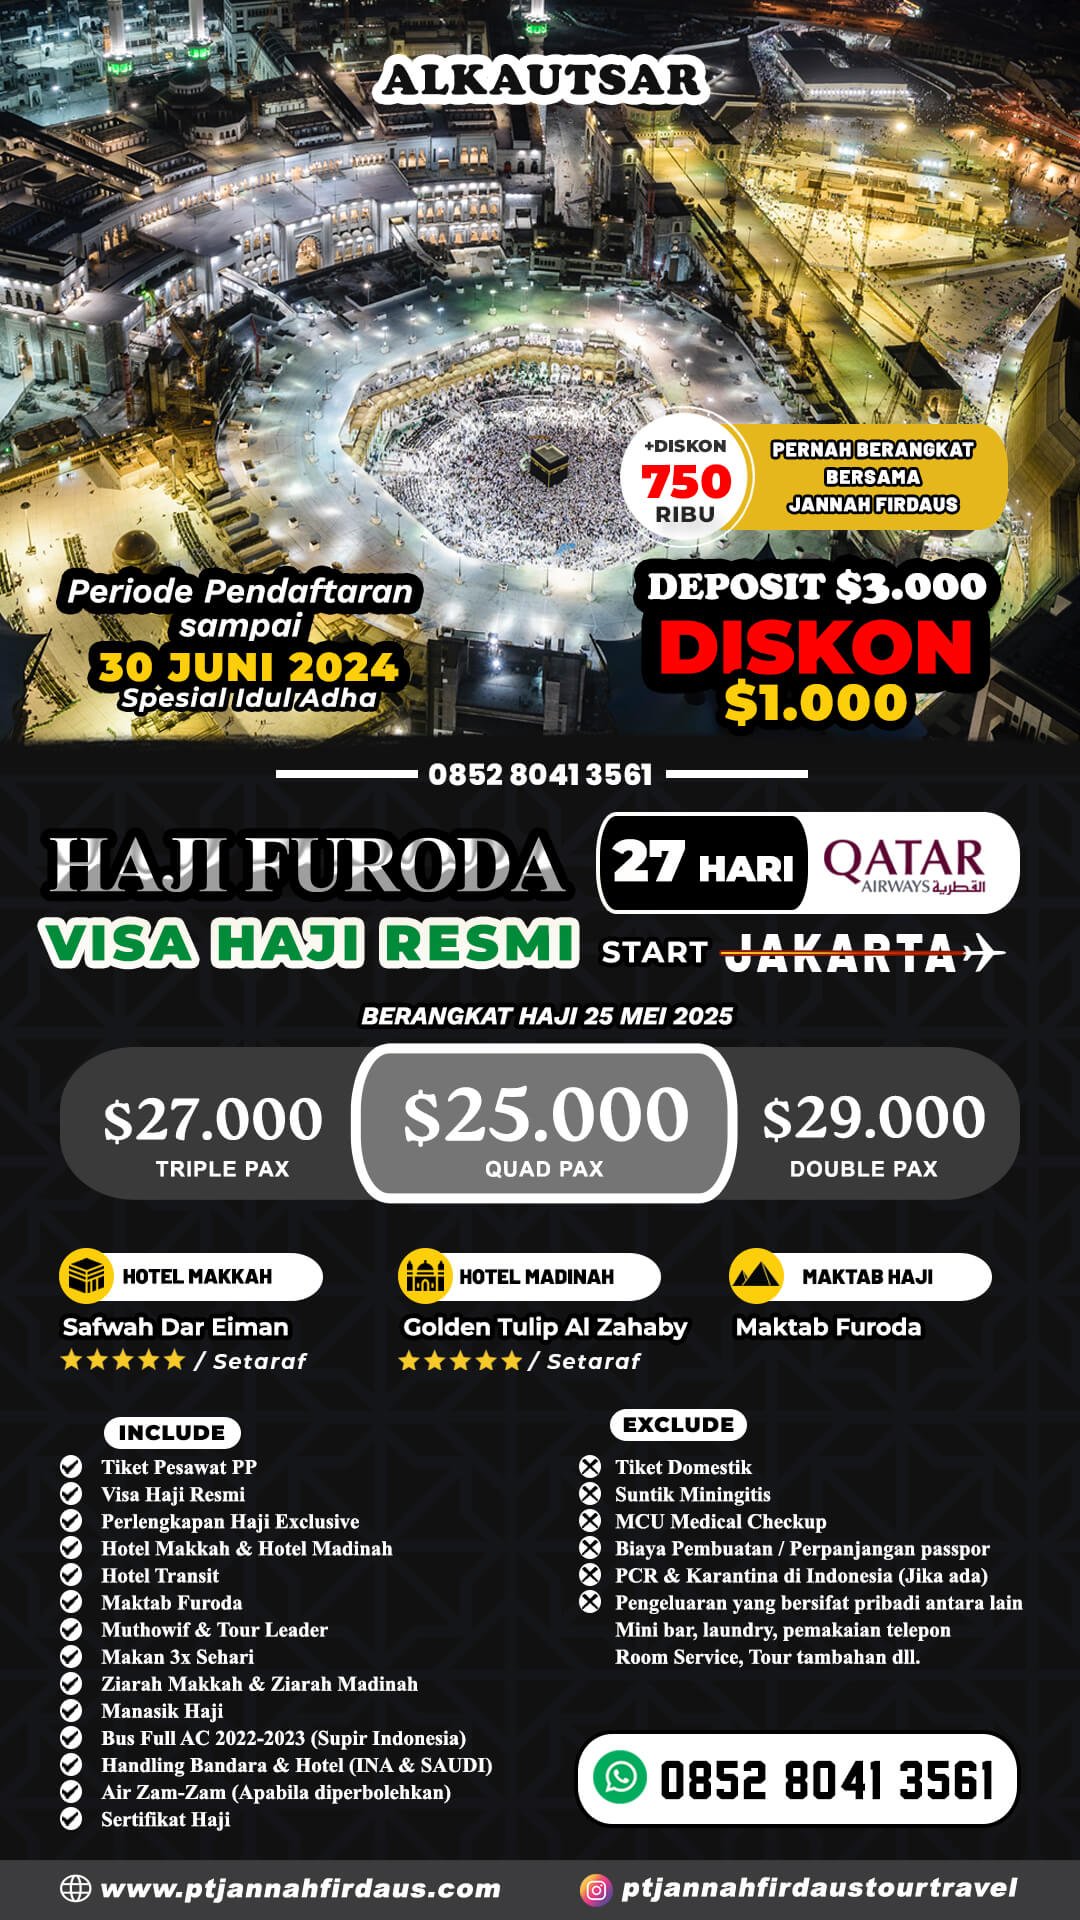 Haji Furoda 2025 Jannah Firdaus Visa Haji Furoda Resmi Alkautsar 30 Juni 2024